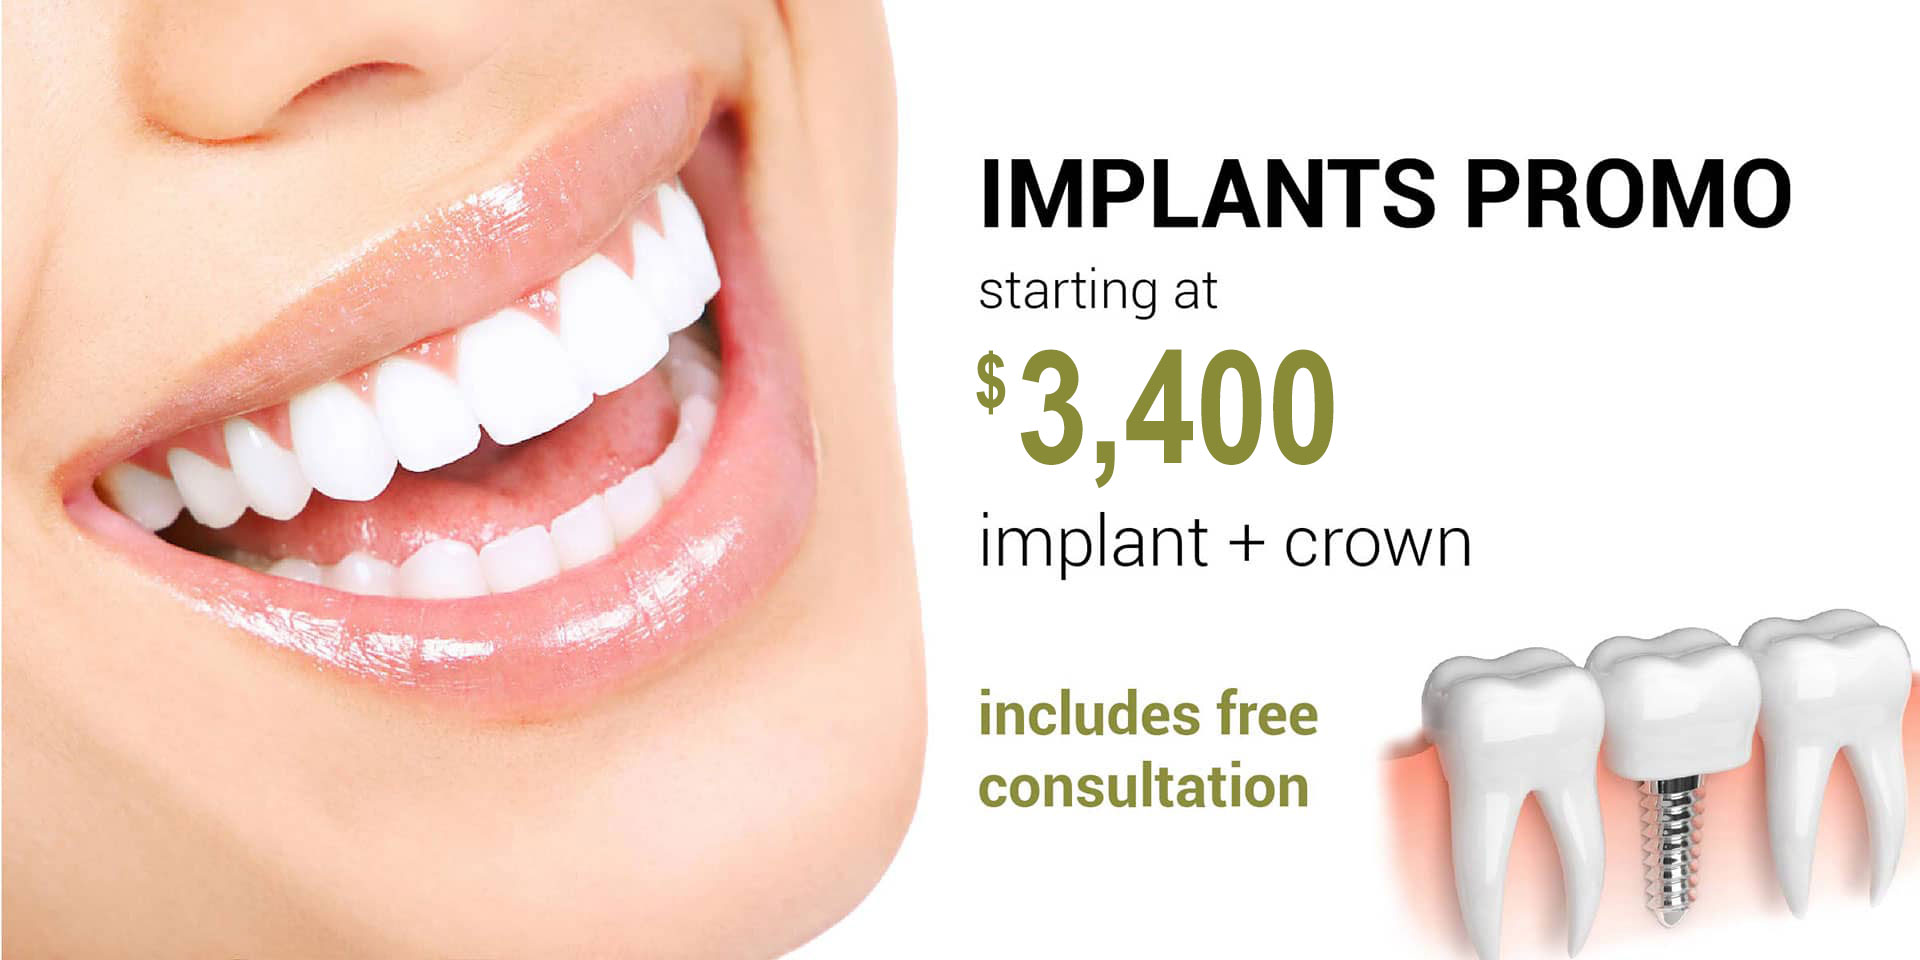 Implant Promo - Includes Free Consultation